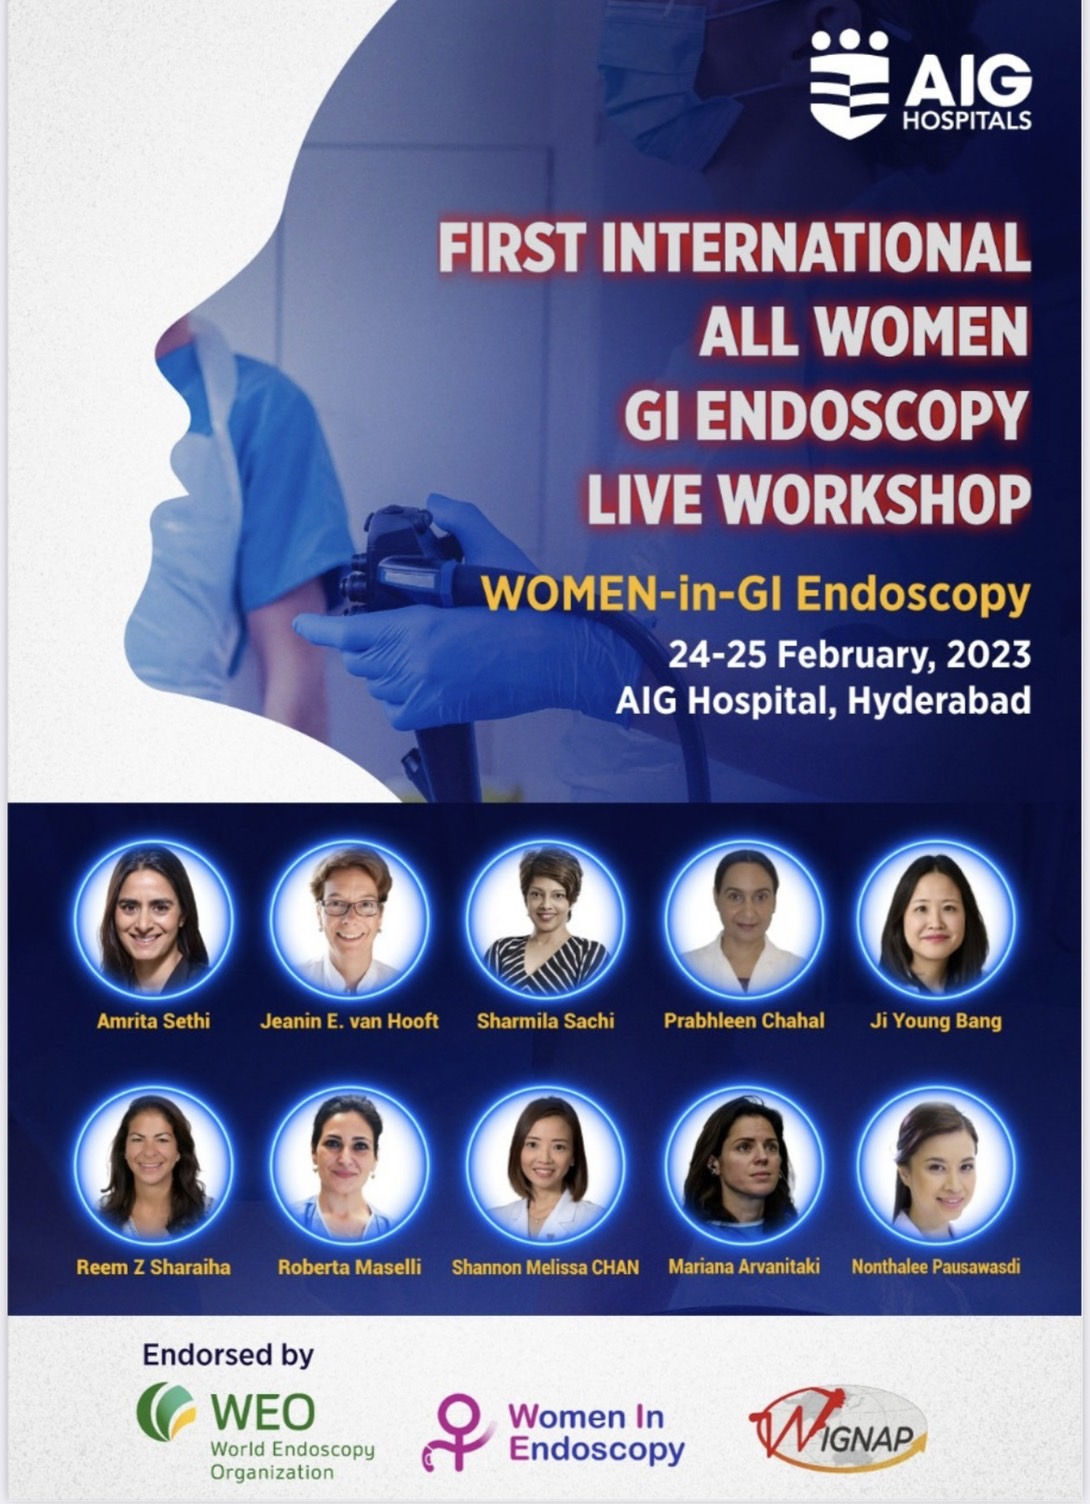 WOMEN-in-GI Endoscopy : FIRST INTERNATIONAL ALL WOMEN GI ENDOSCOPY LIVE WORKSHOP